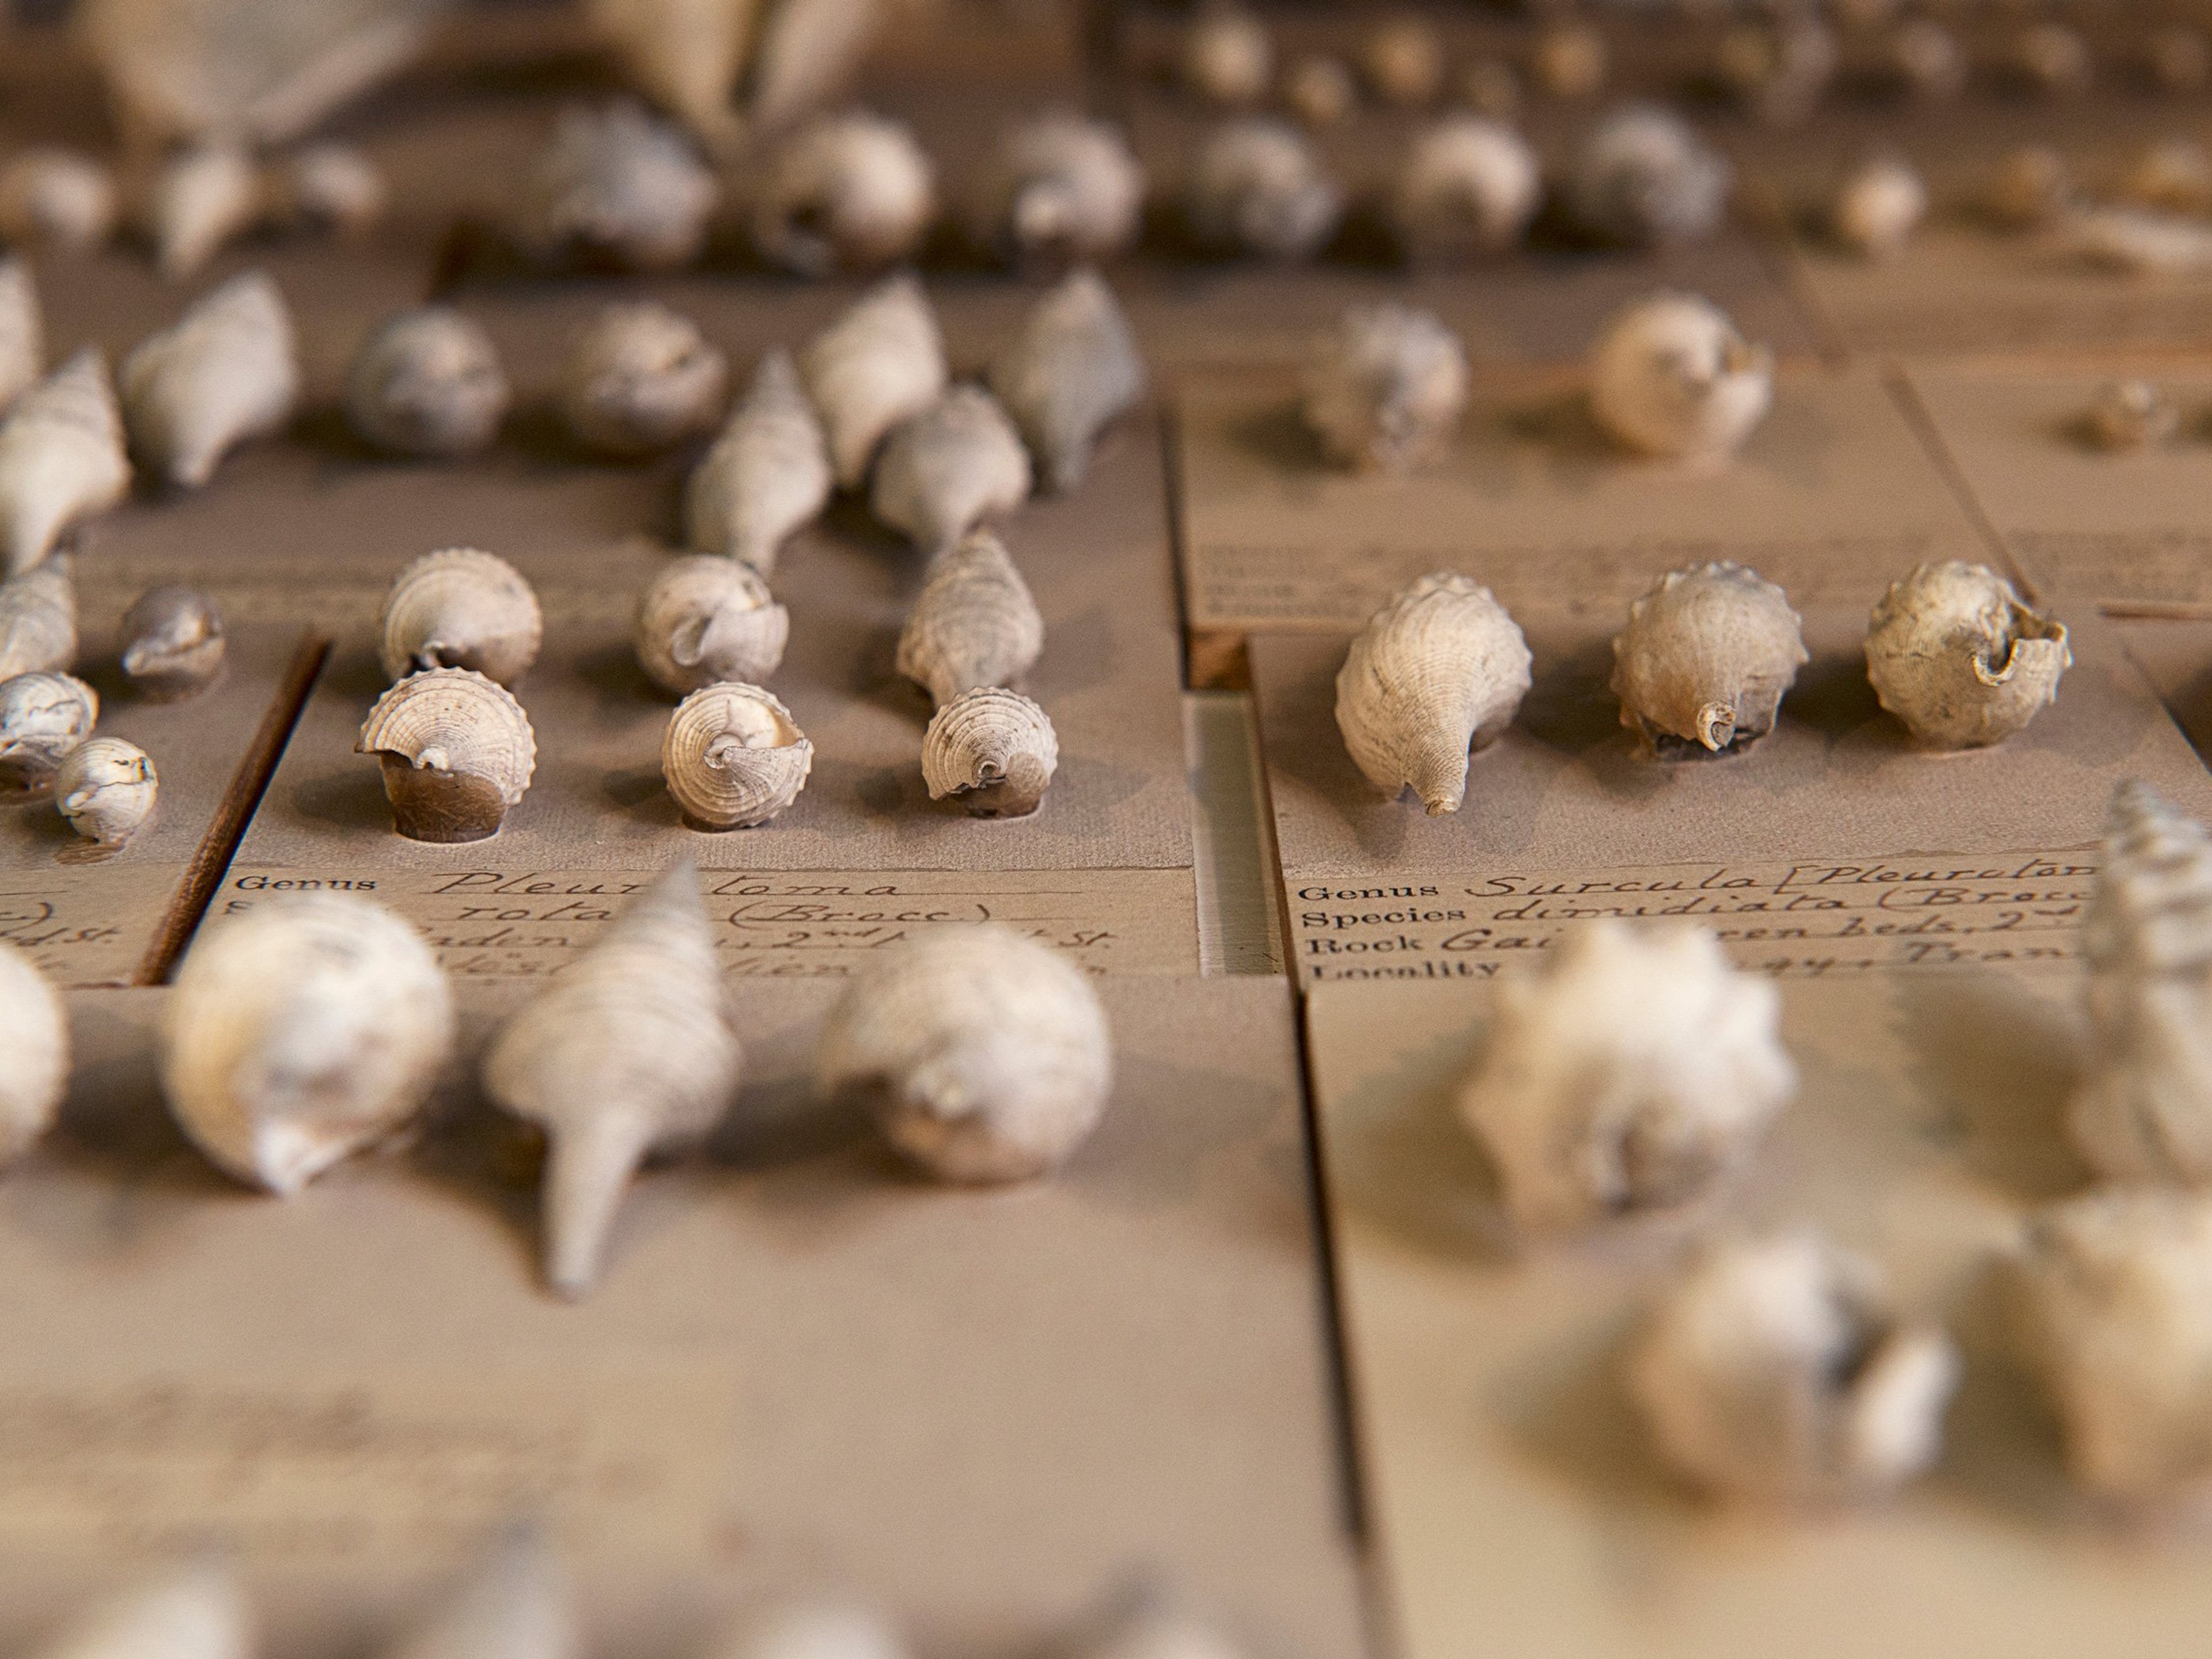 A museum display of seashells with handwritten descriptions.